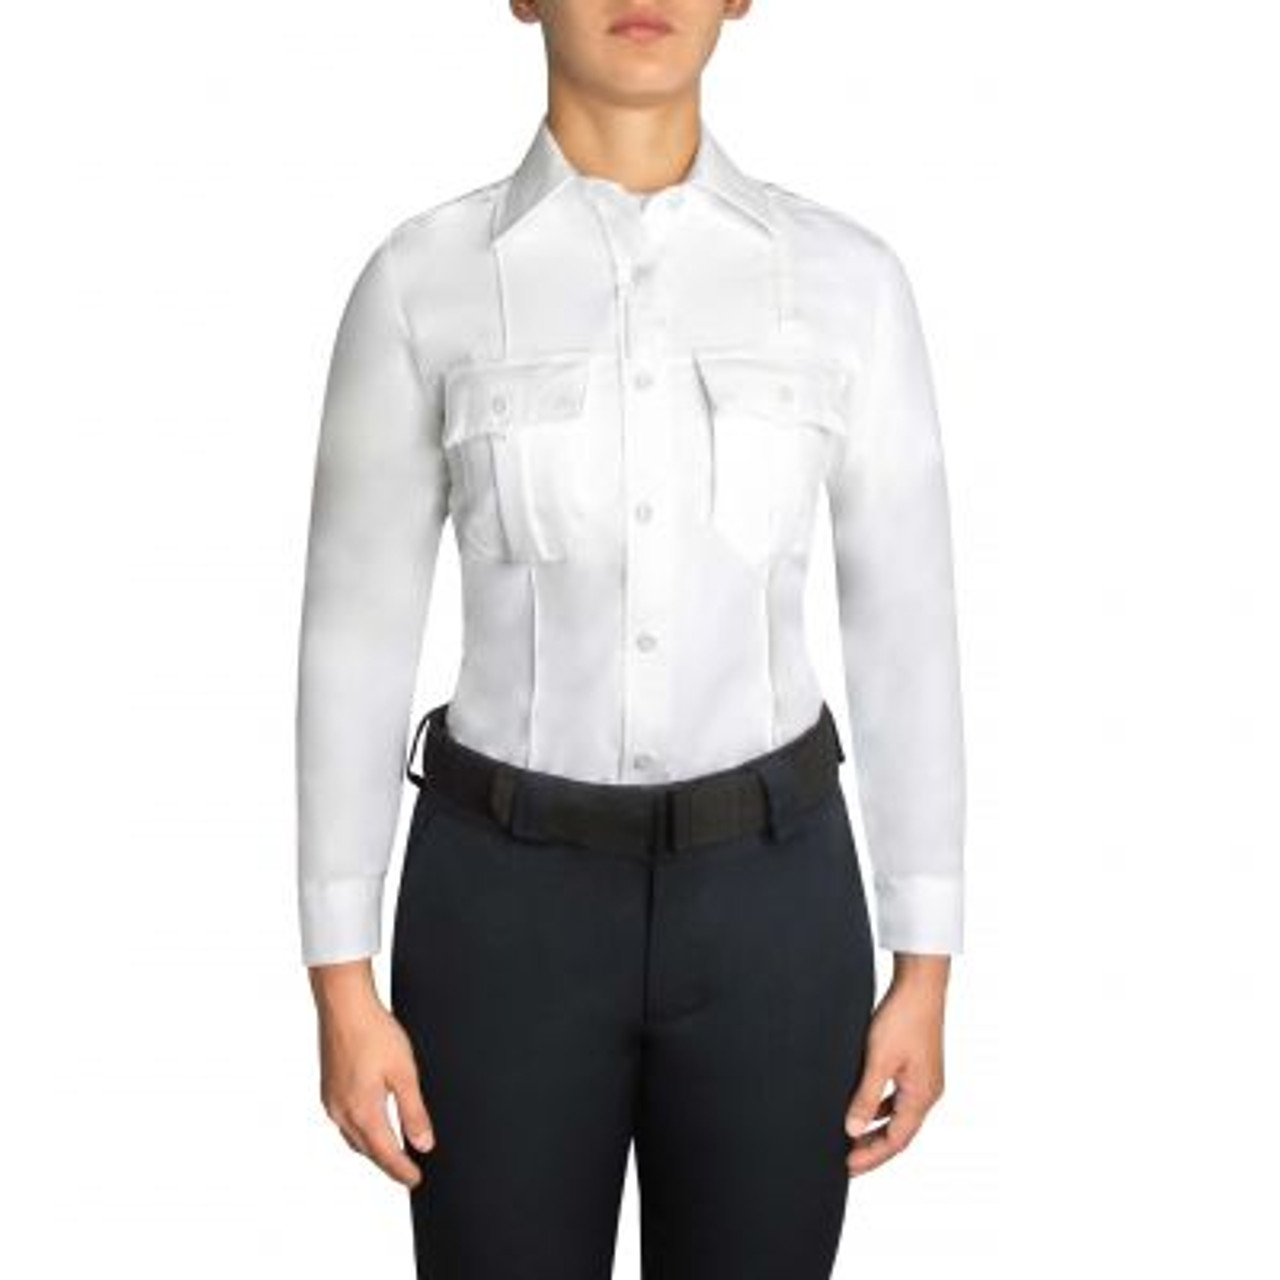 Women's Long Sleeve Polyester SuperShirt